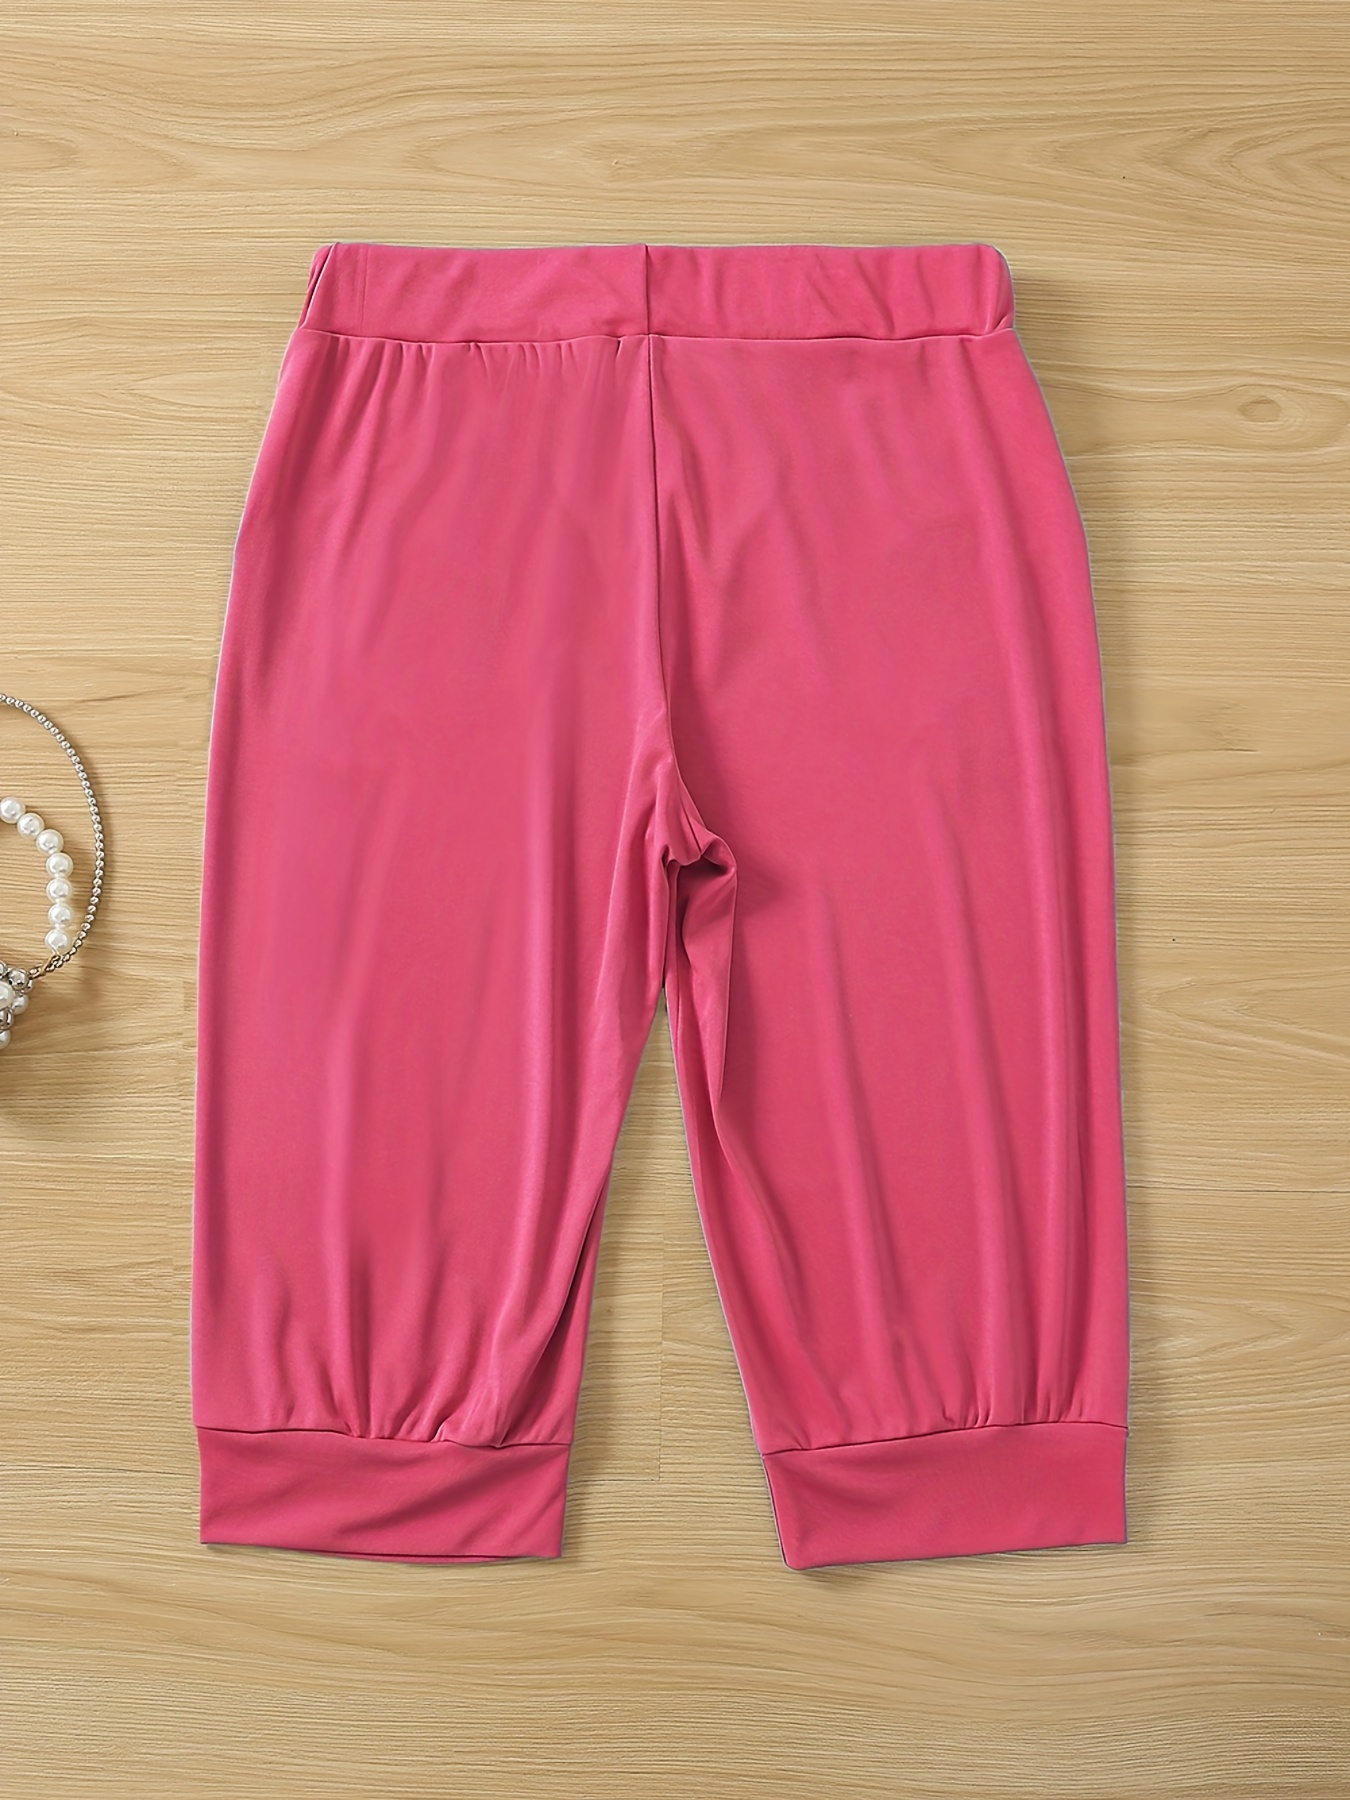 Womens Capri Lounge Pants Elastic High Waisted Drawstring Slacks Capris  Summer Casual Solid Color 3/4 Pants (Large, Dark Gray) 